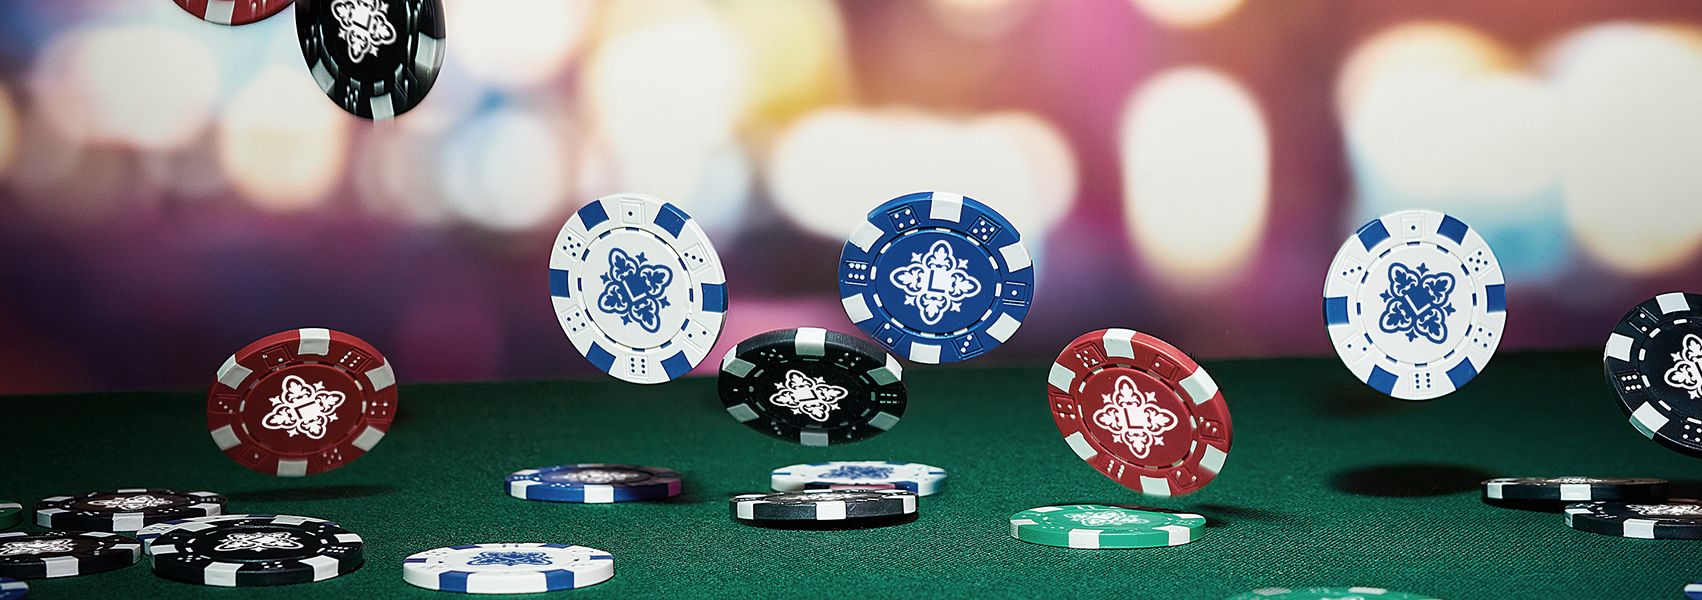 About Online Poker Bonuses